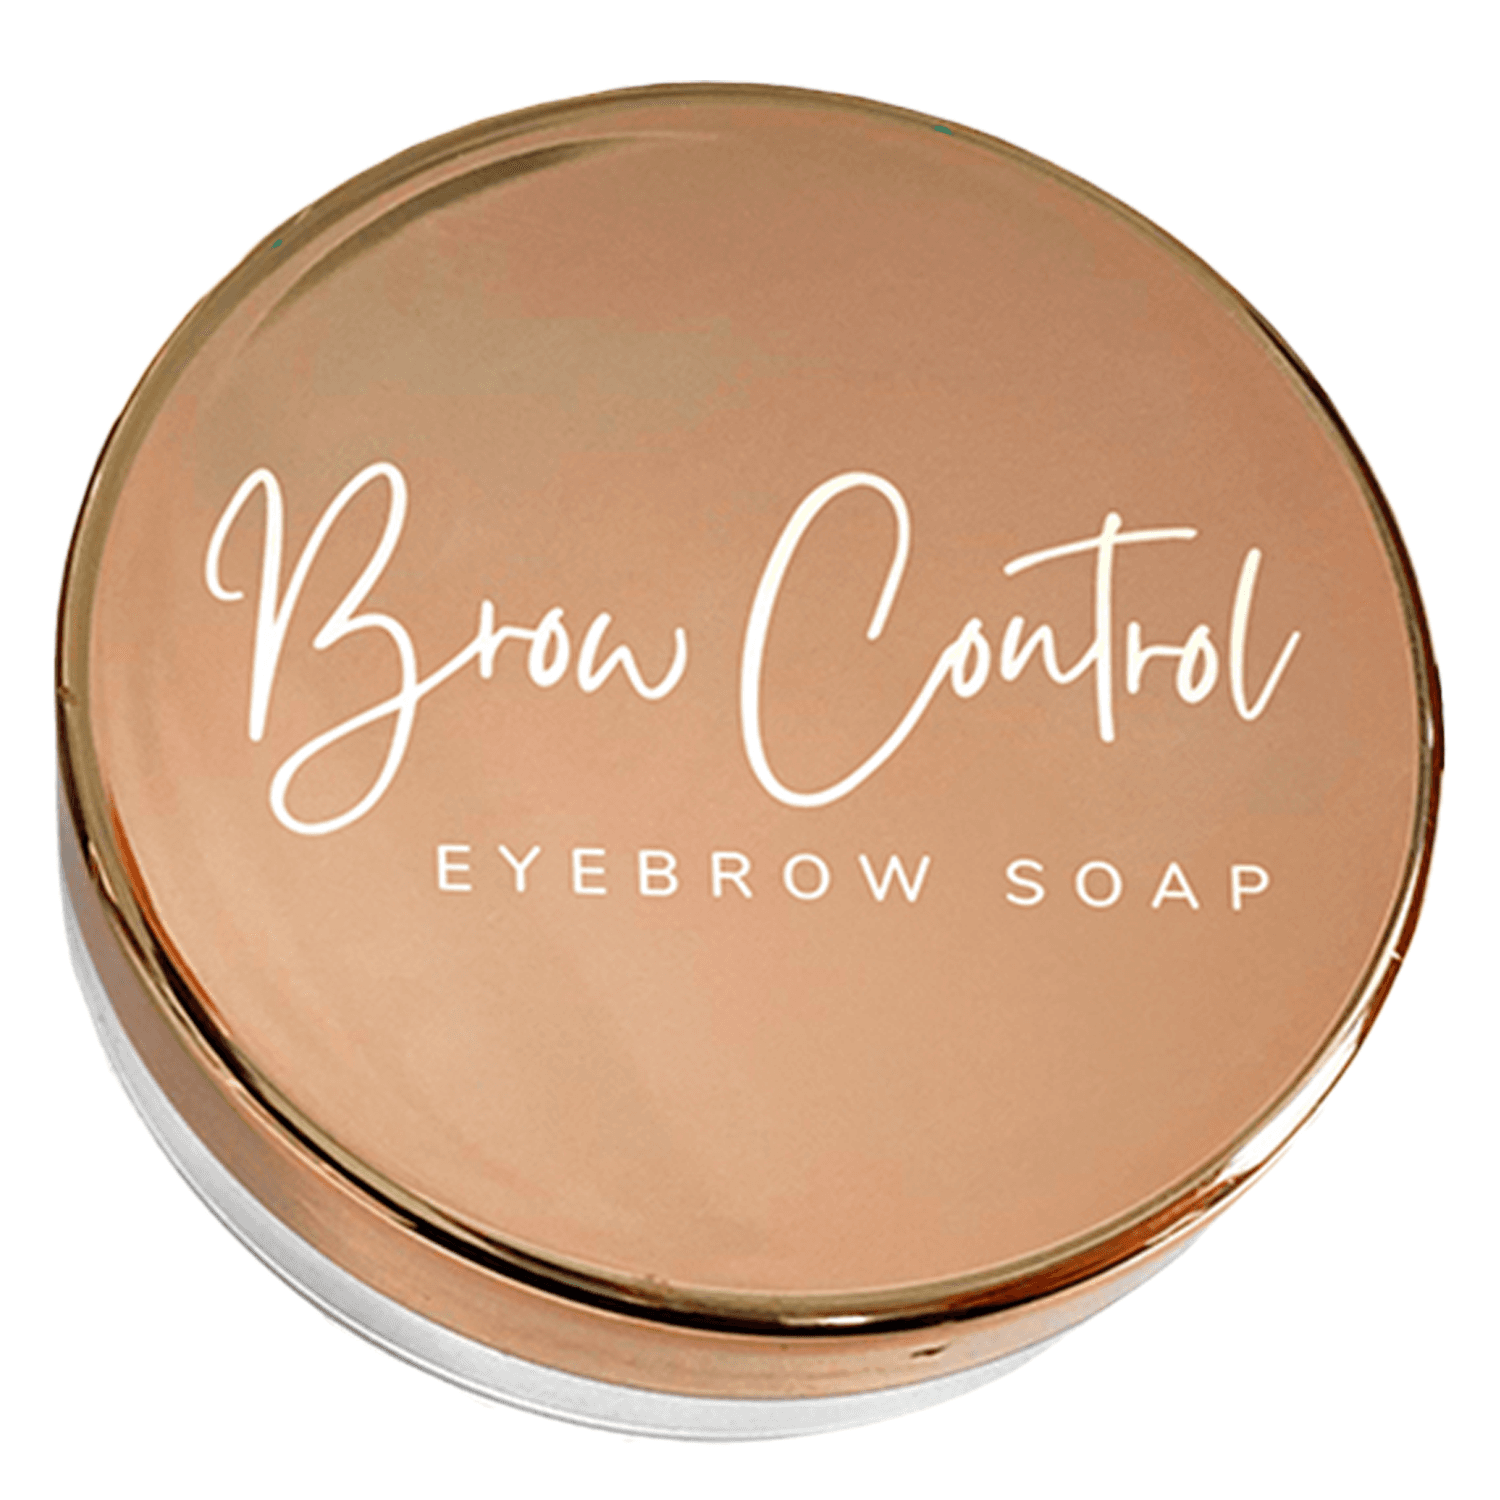 GL Beautycompany - Brow Control Styling Soap